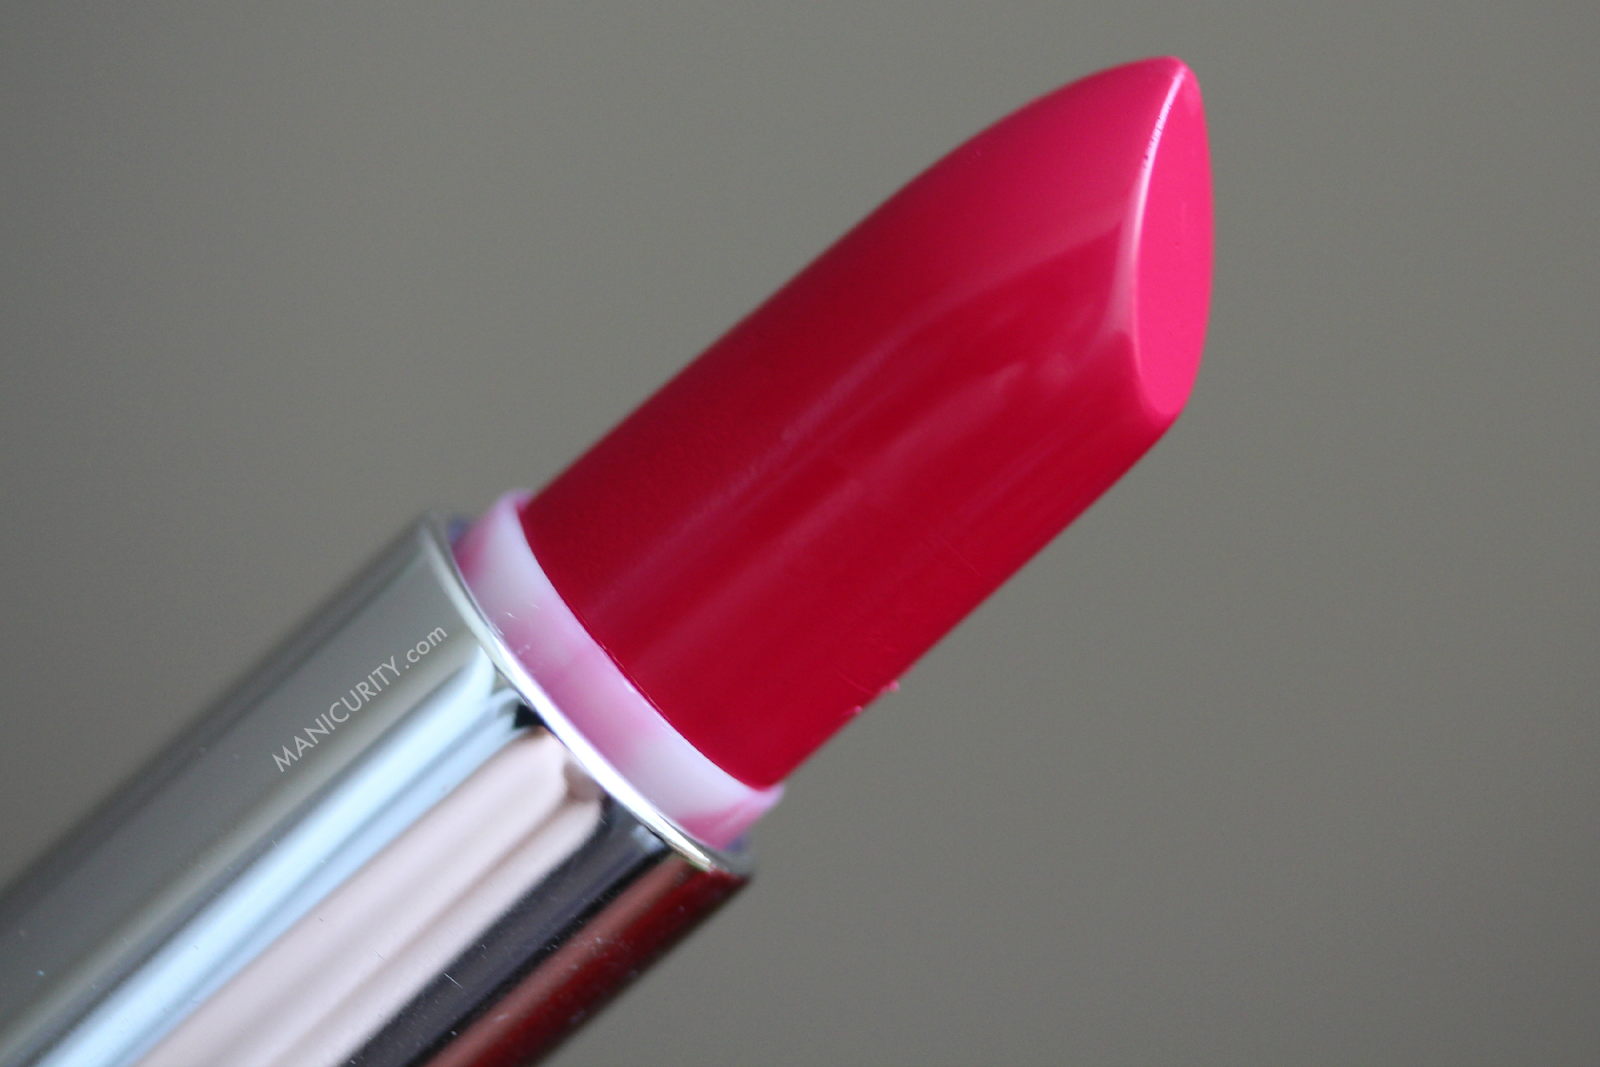 Rimmel Moisture Renew Sheer & Shine Lipstick